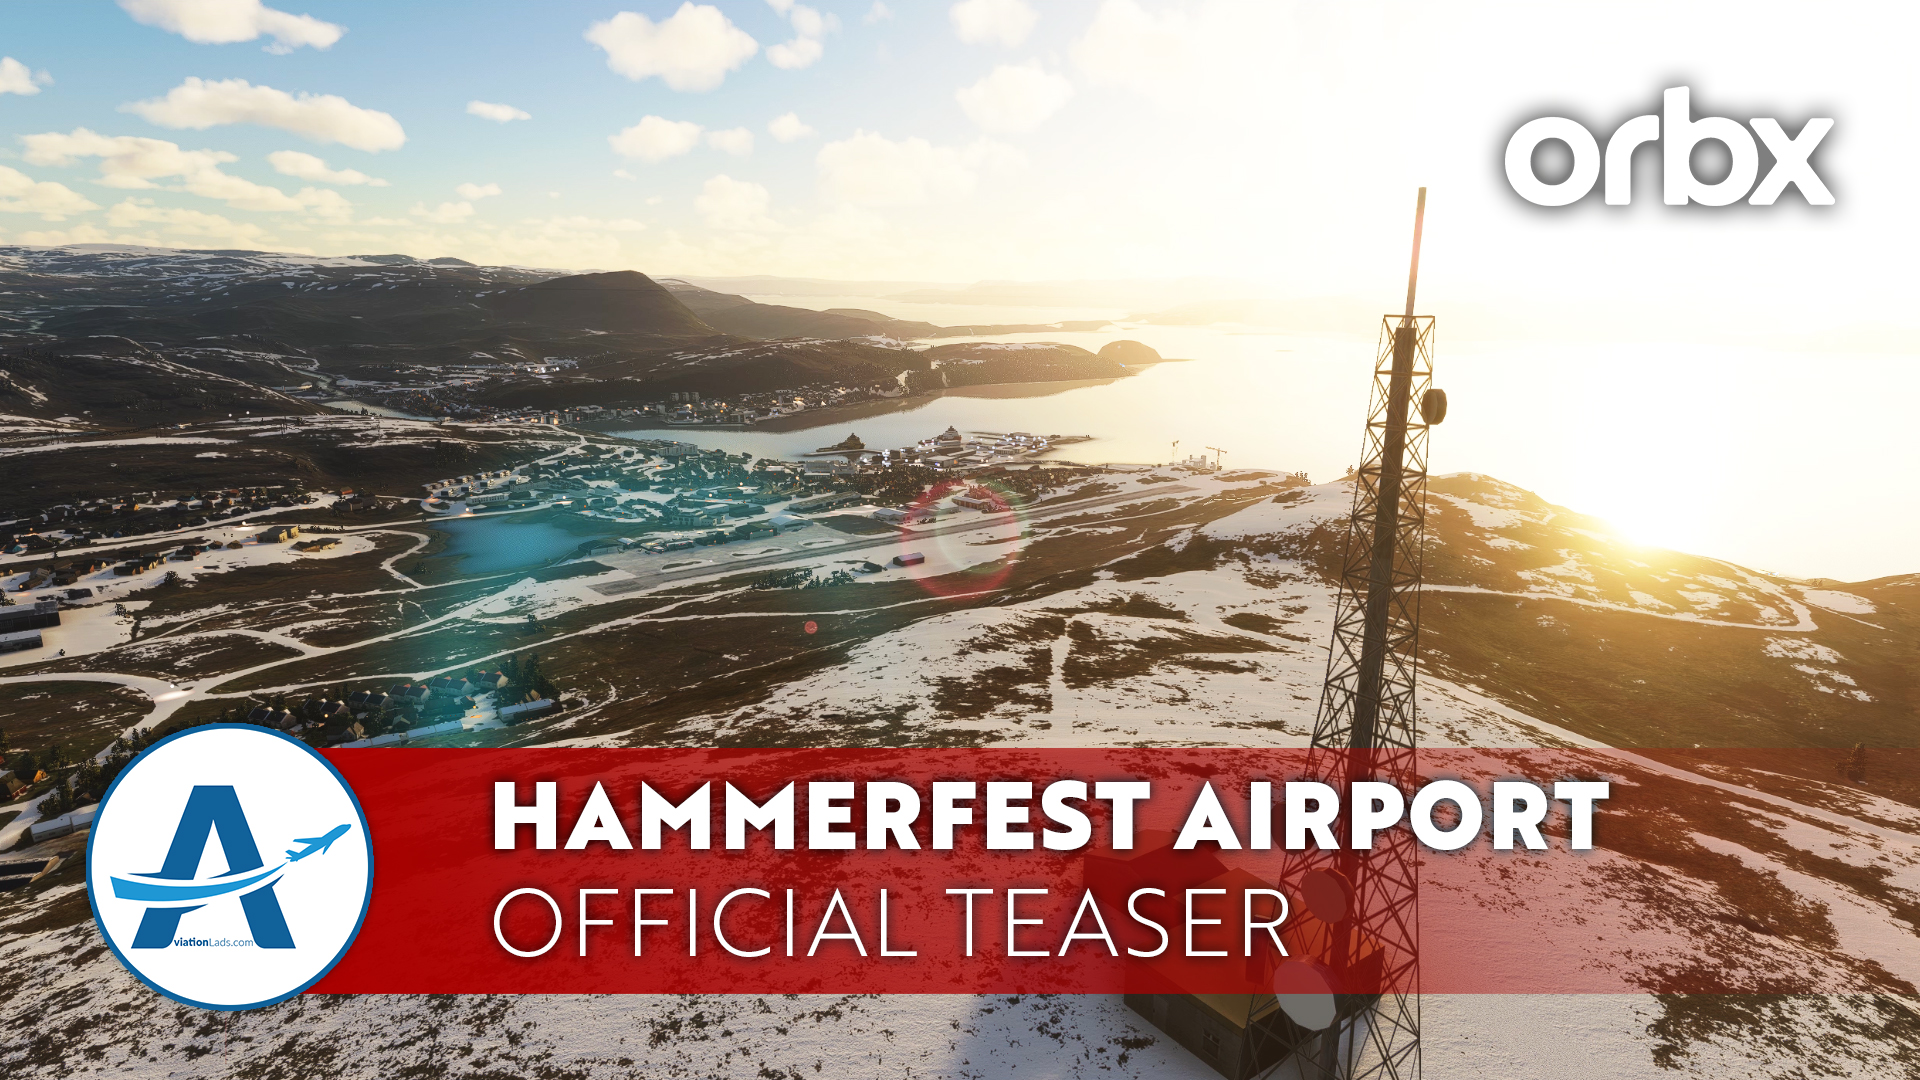 [TEASER] Orbx Hammerfest Airport